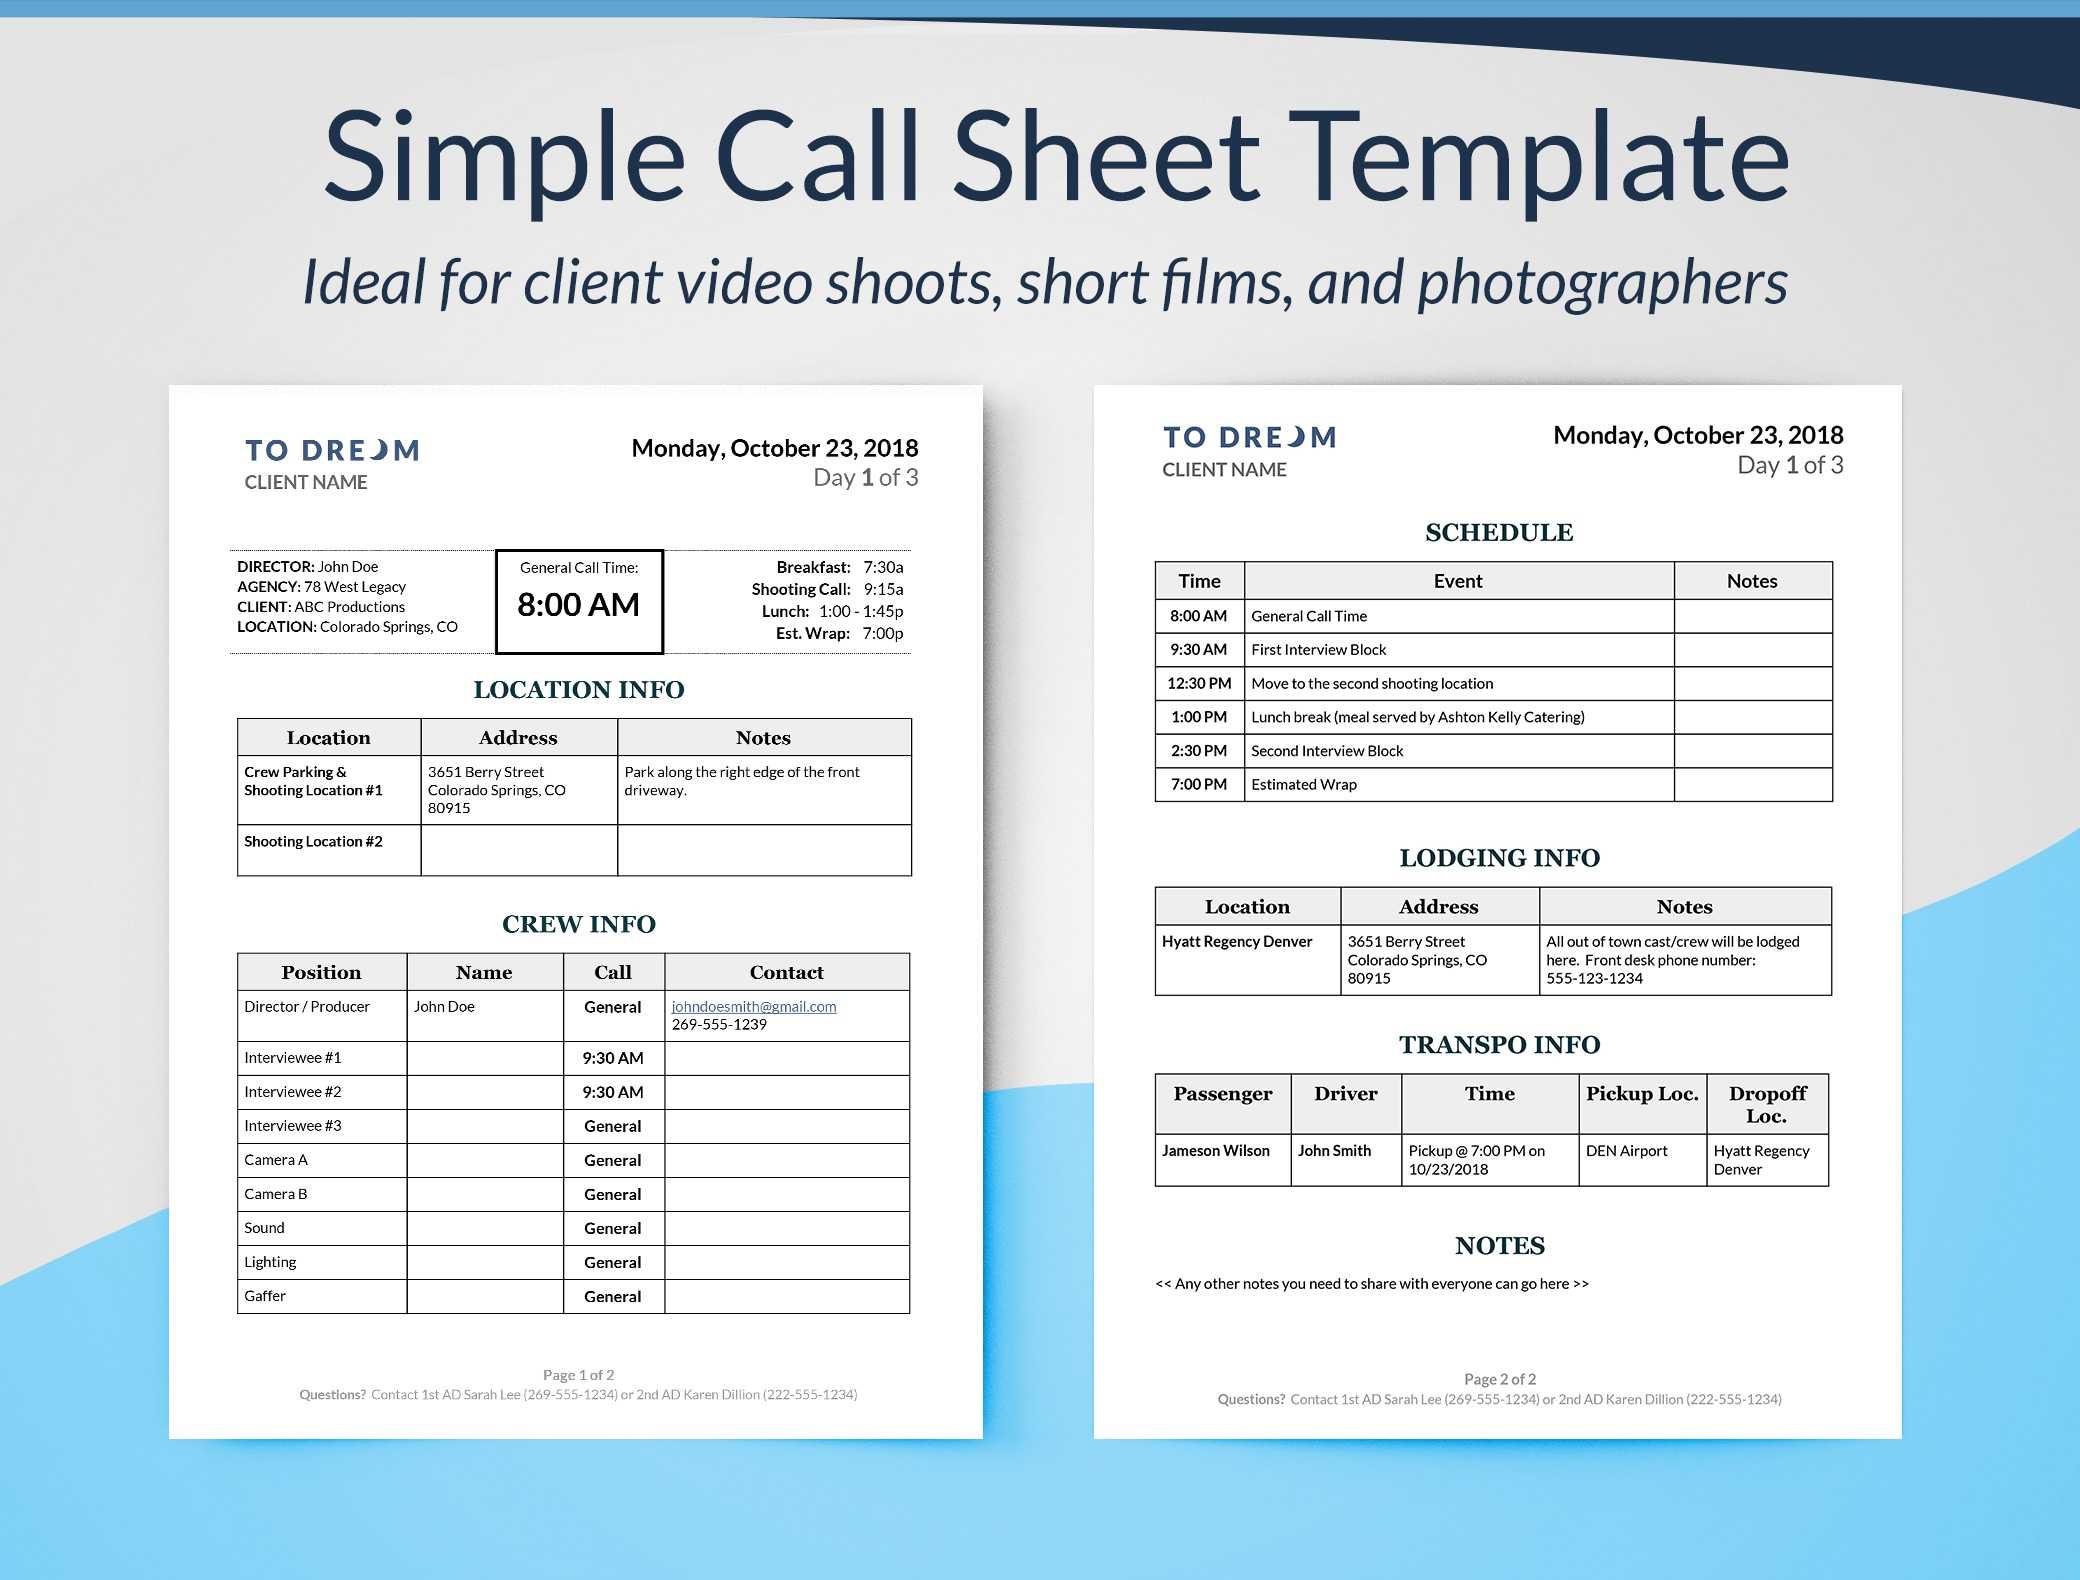 Simple Call Sheet Template Word Doc | Sethero For Film Call Sheet Template Word